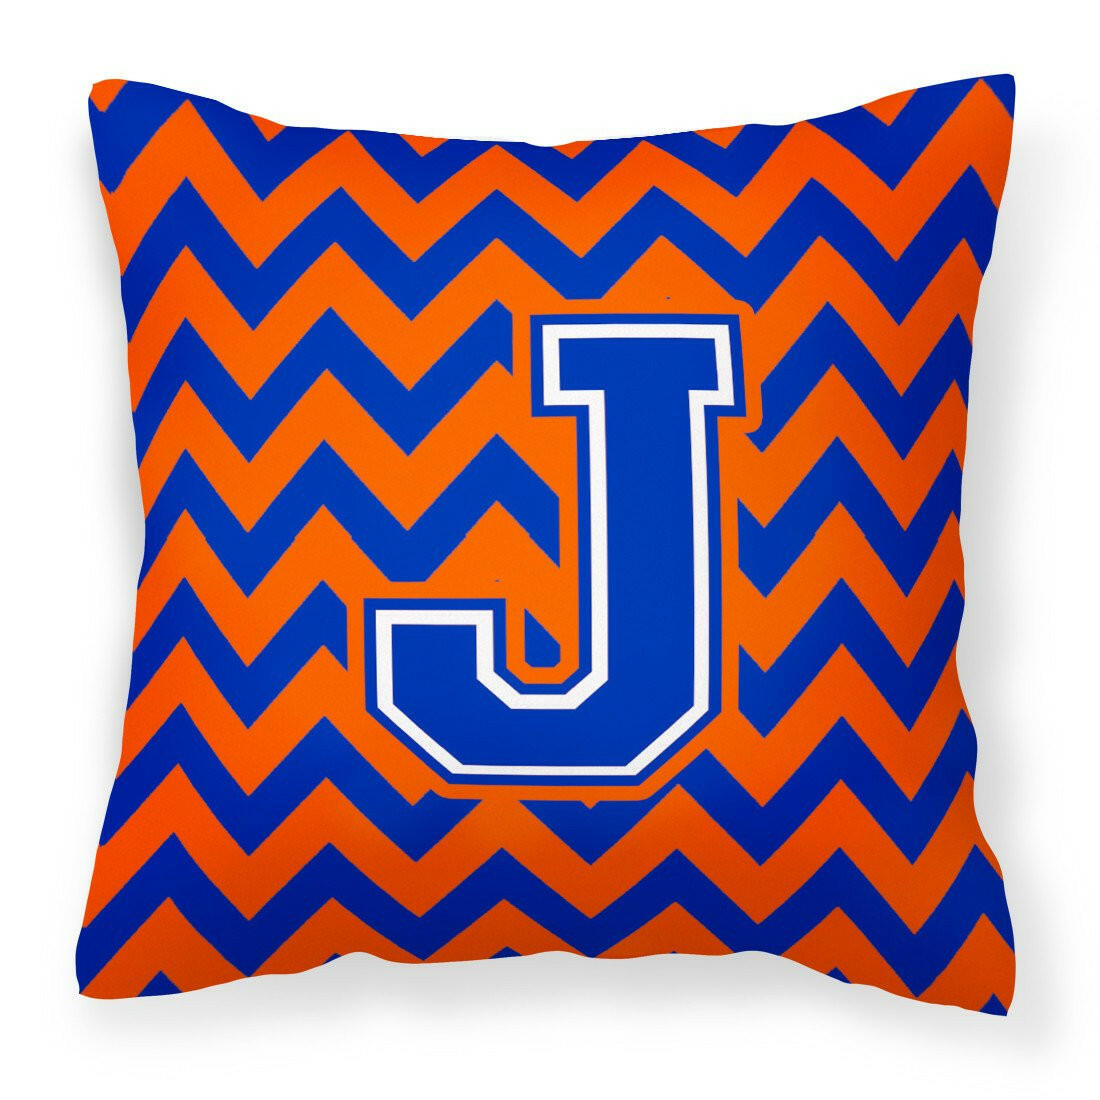 Letter J Chevron Orange and Blue Fabric Decorative Pillow CJ1044-JPW1414 - the-store.com